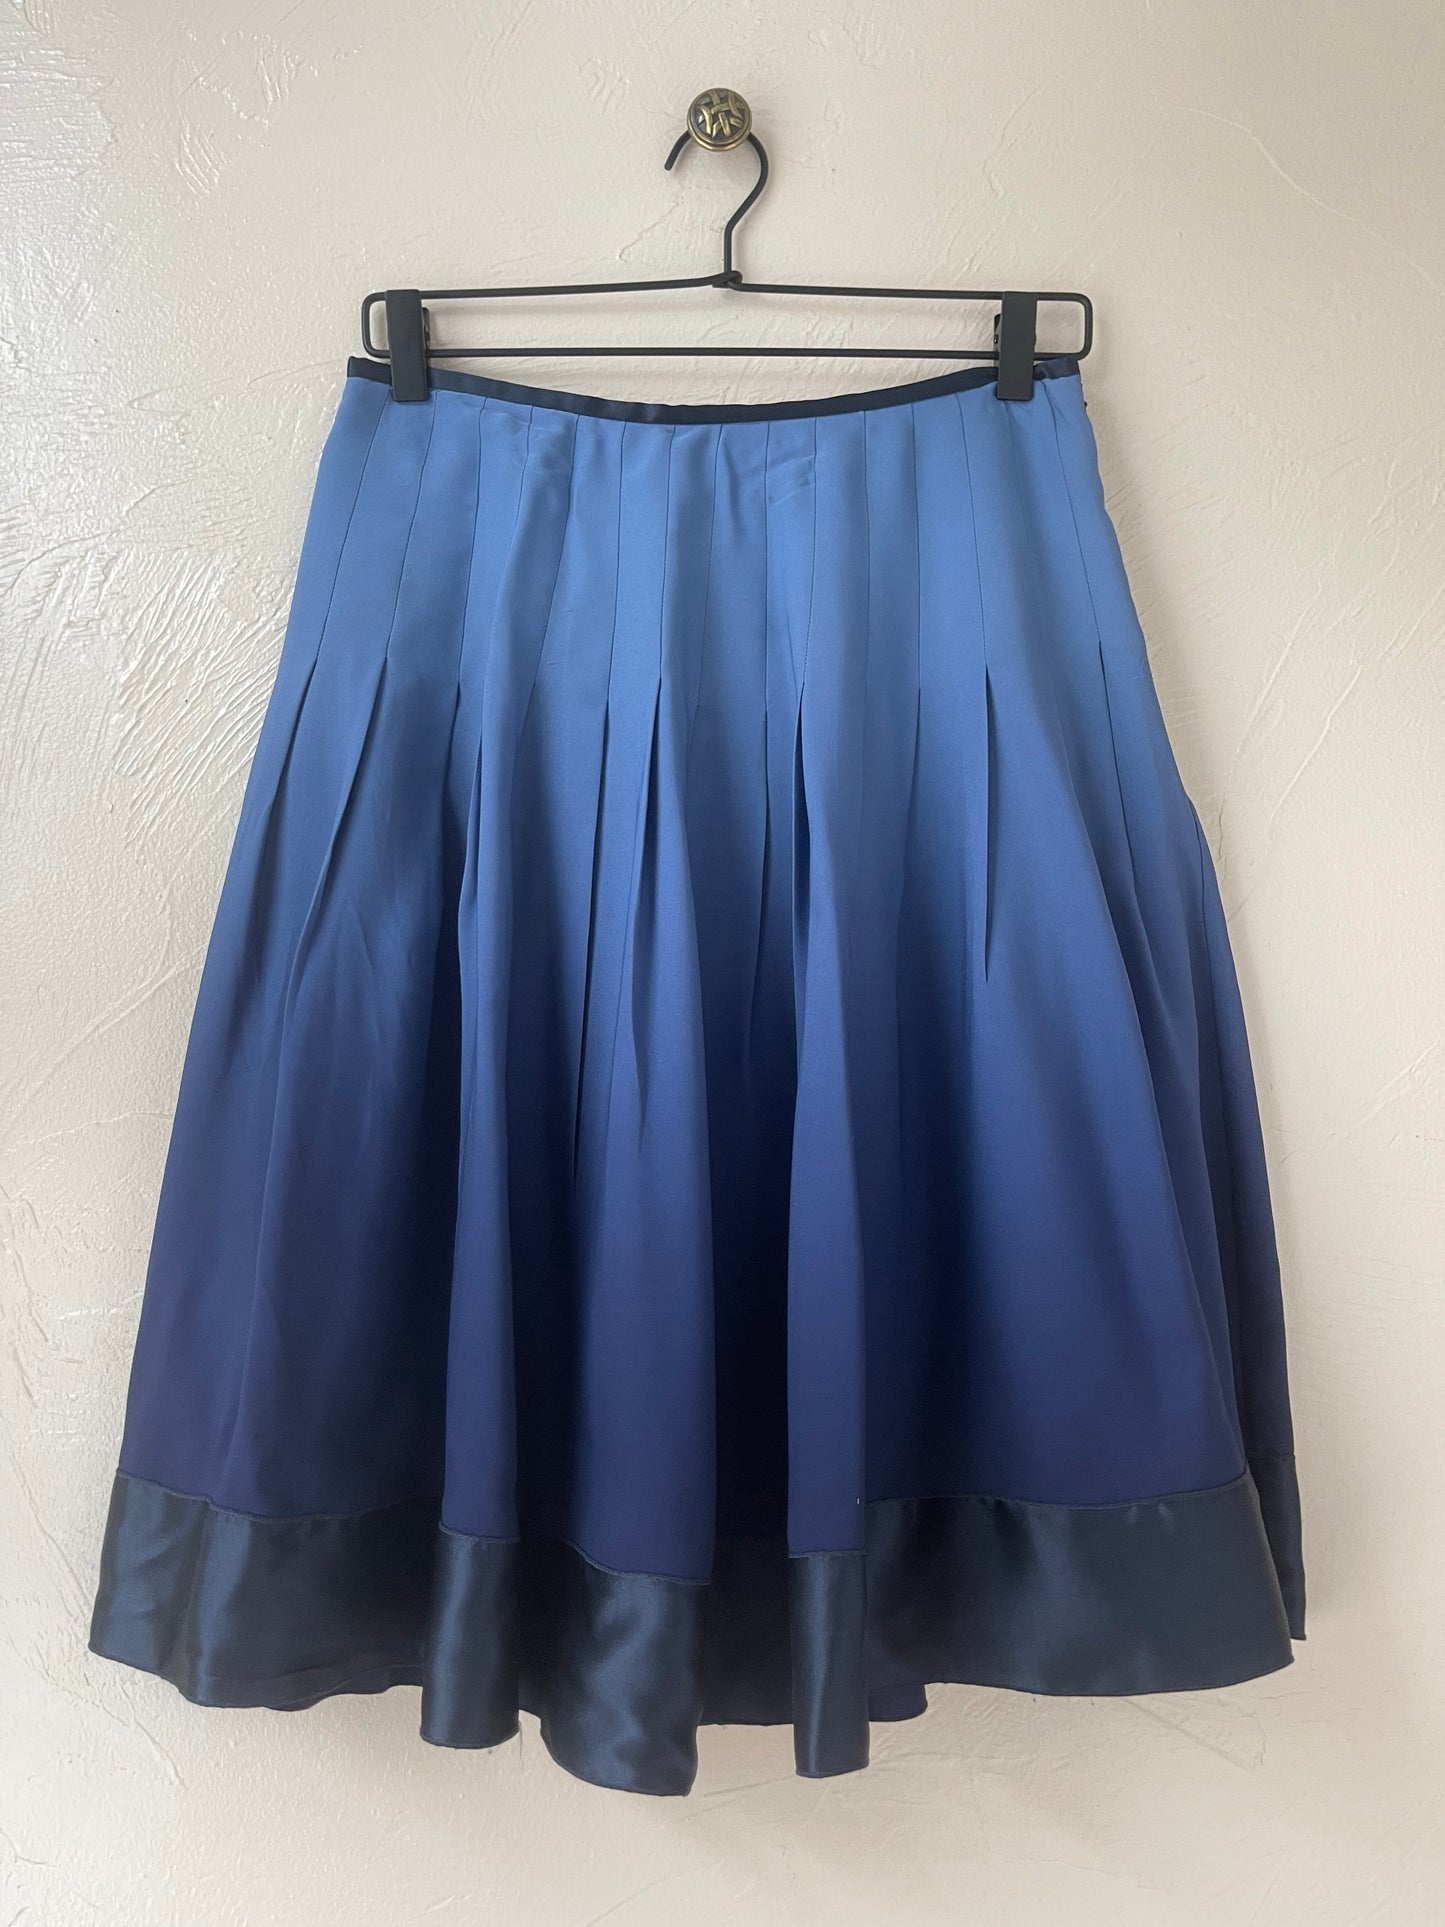 Falda plisada degradada azul